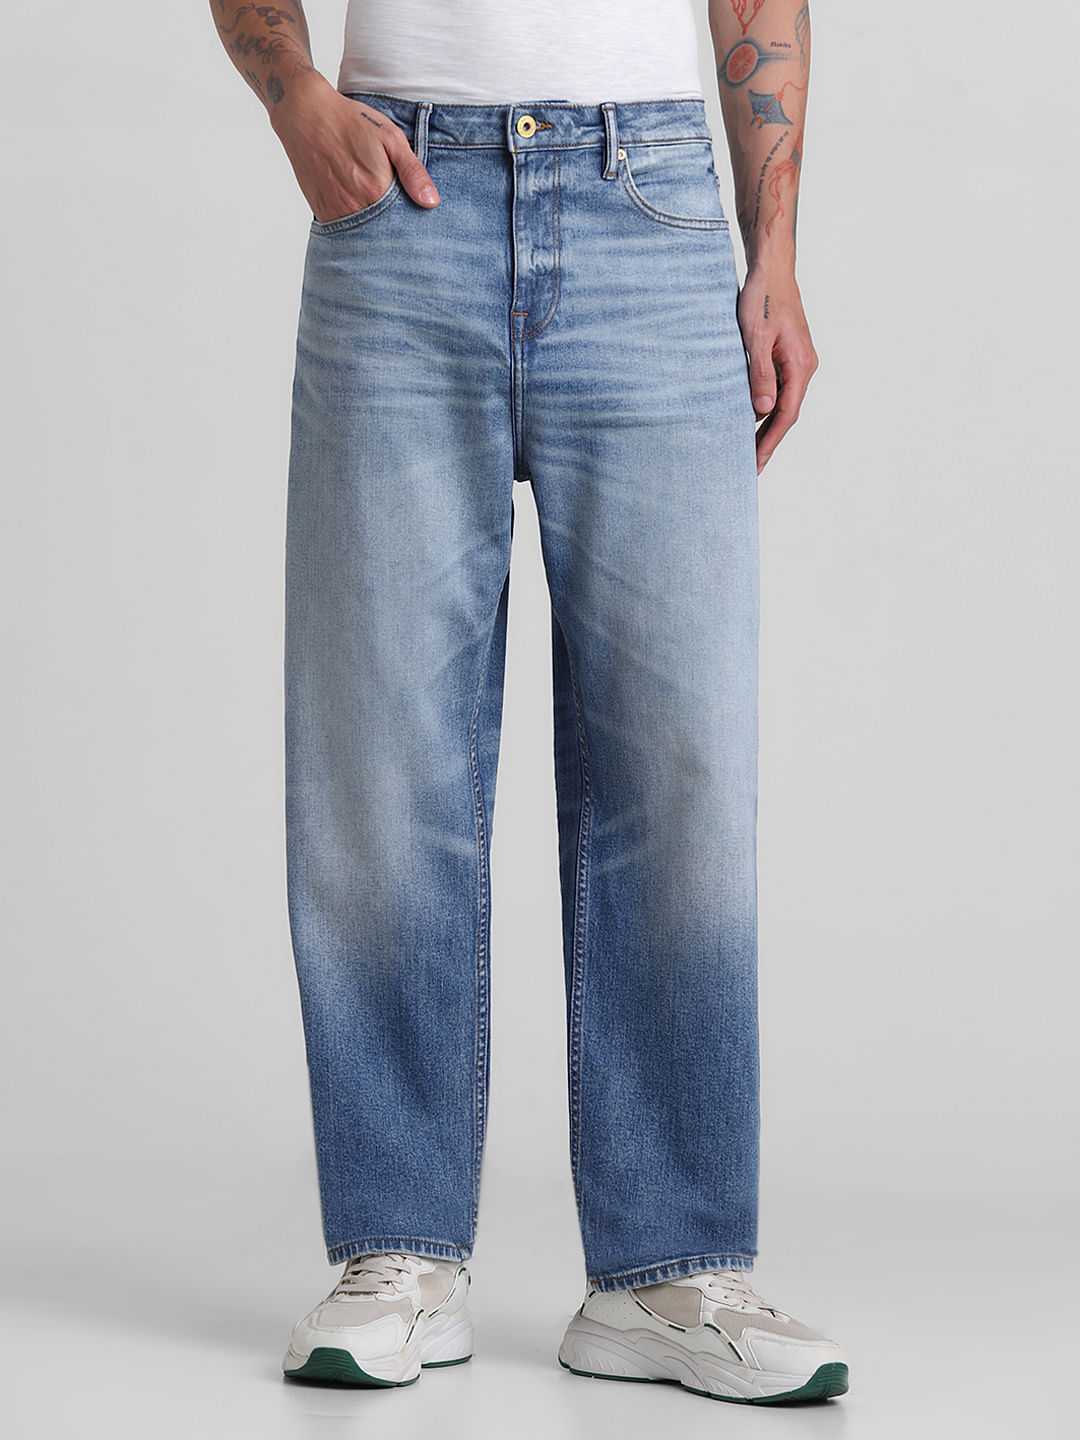 Washable Soft Stretchable Regular Fit Men's Plain Blue Denim Jeans, 30  Waist Size at Best Price in Surat | Y.b Trends